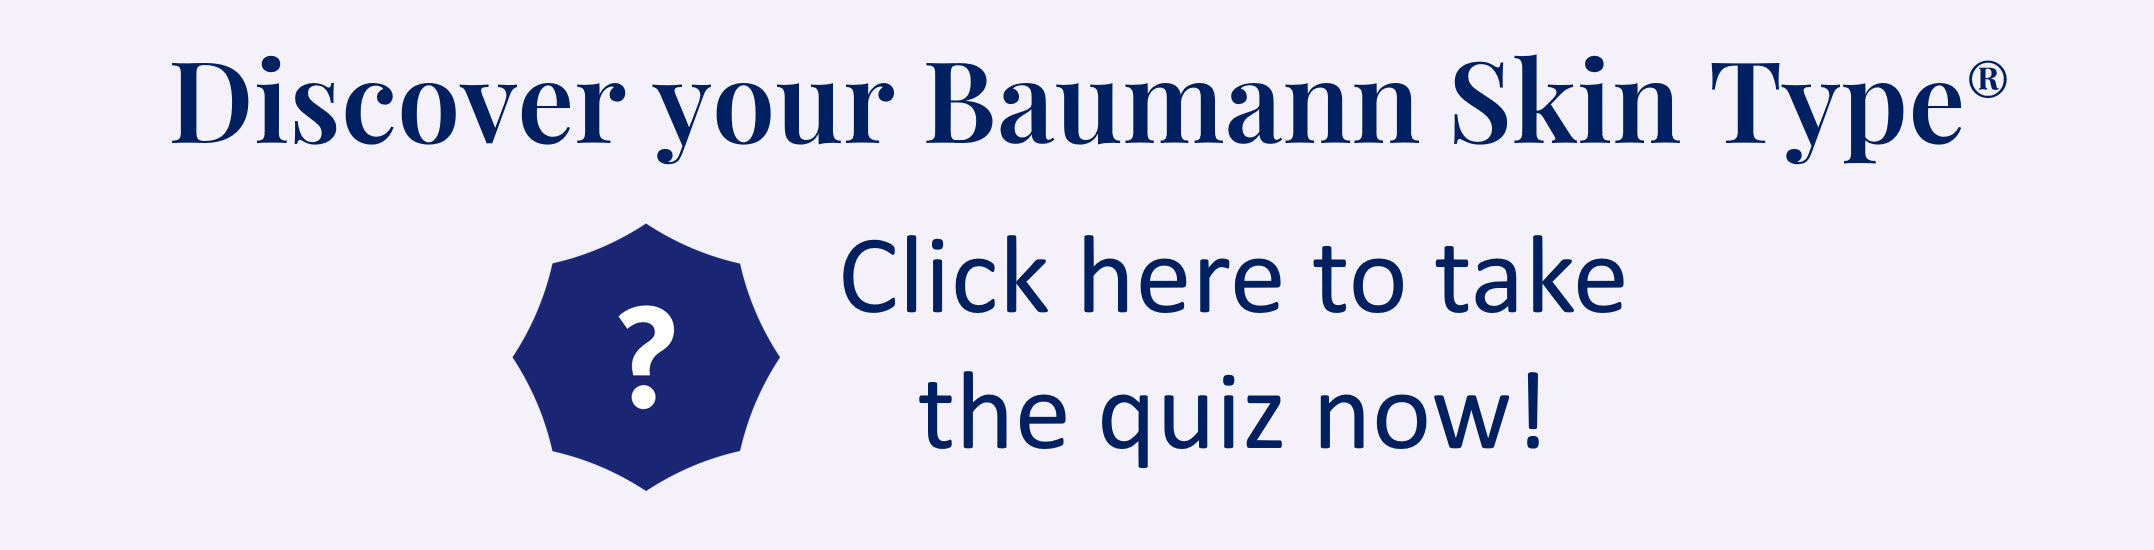 Take Baumann Quiz Now.jpg